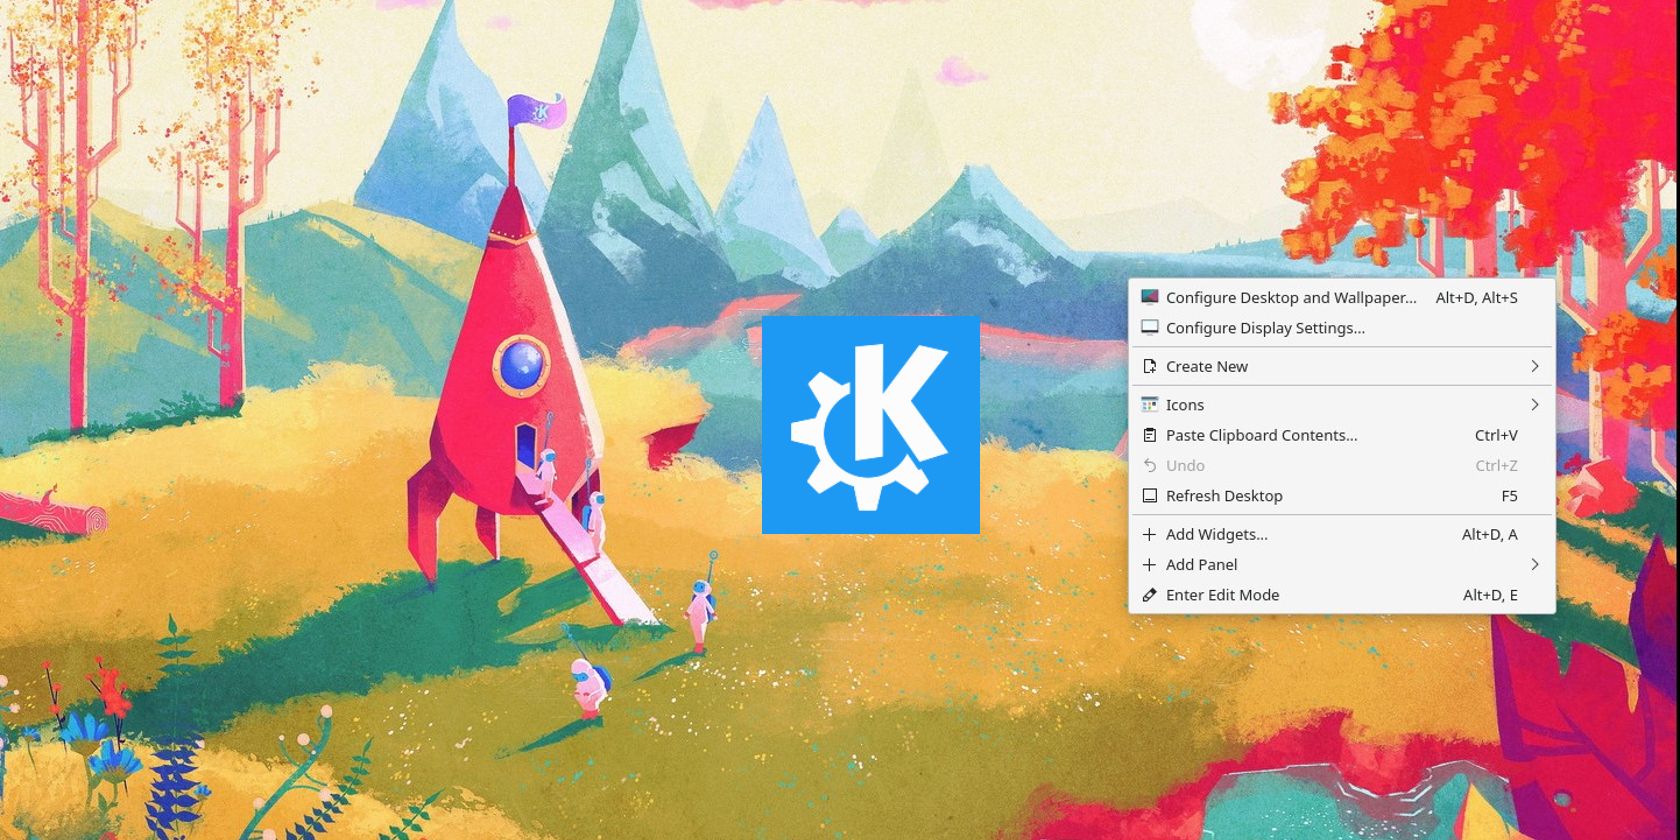 KDE Neon desktop with KDE's logo